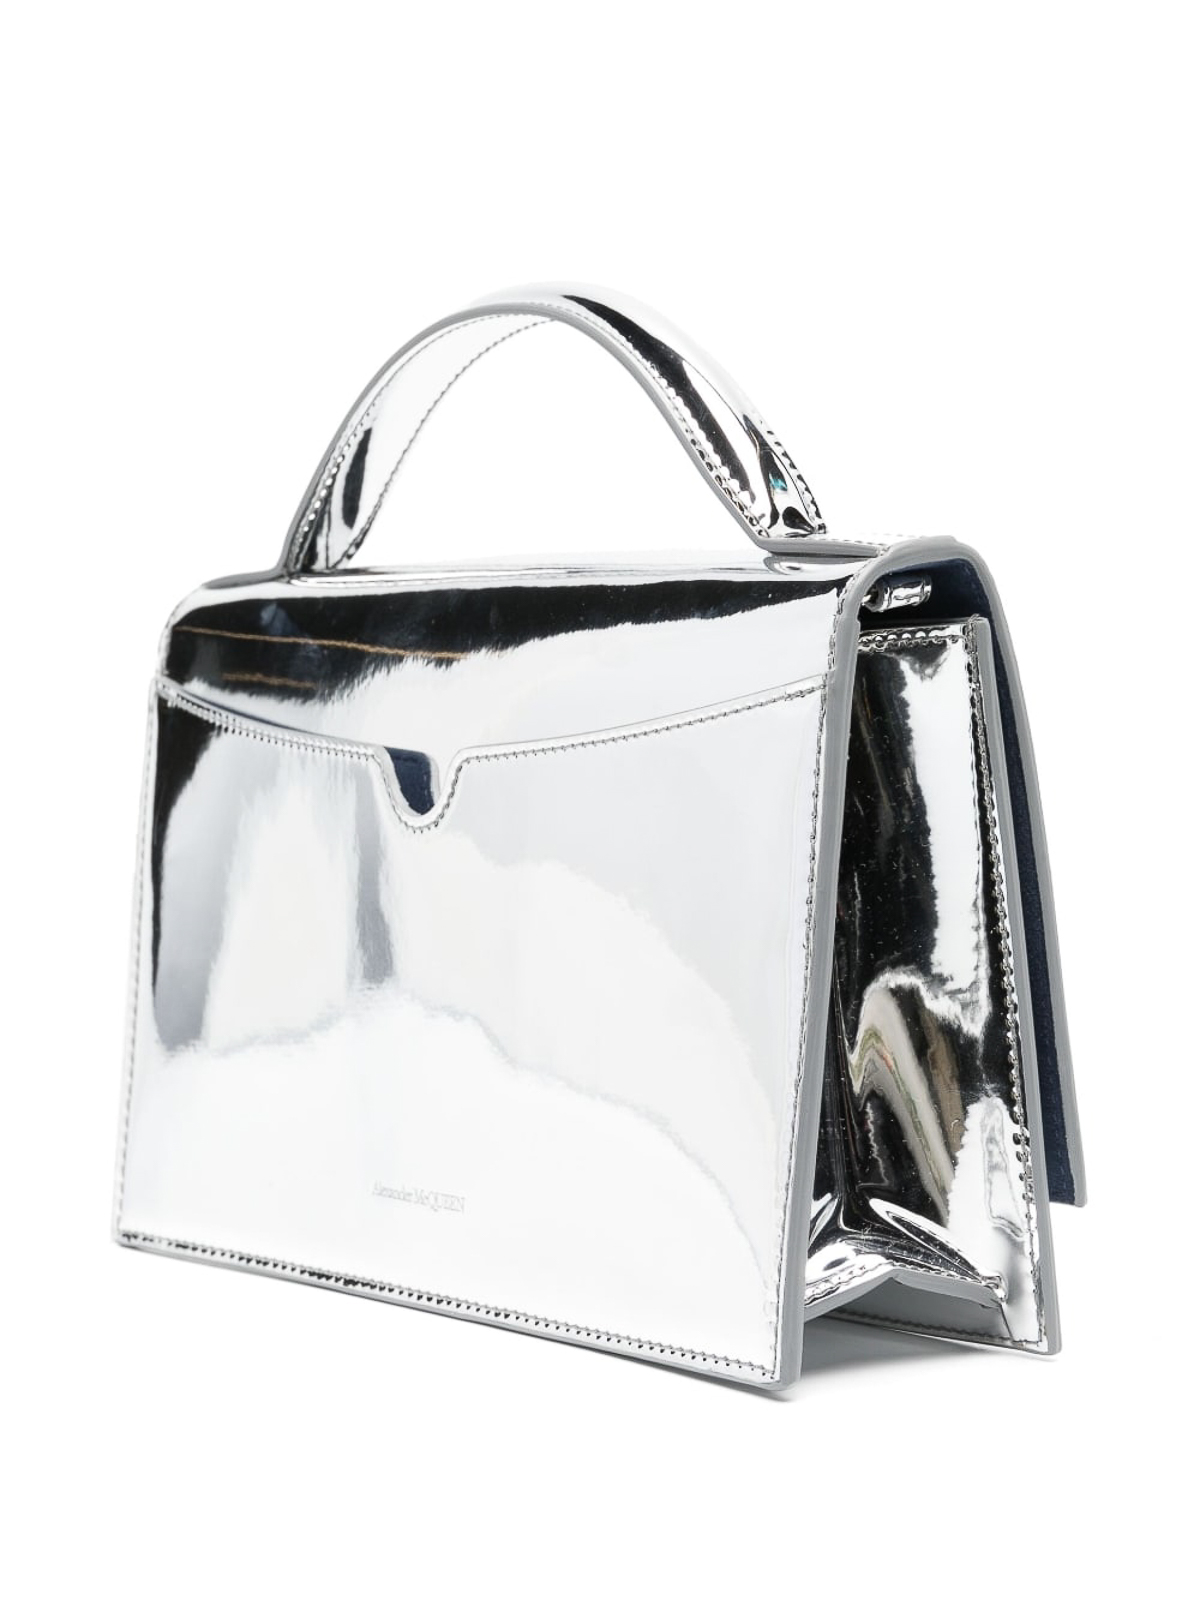 Calvin Klein Lock Leather Metallic Silver Crossbody Bag